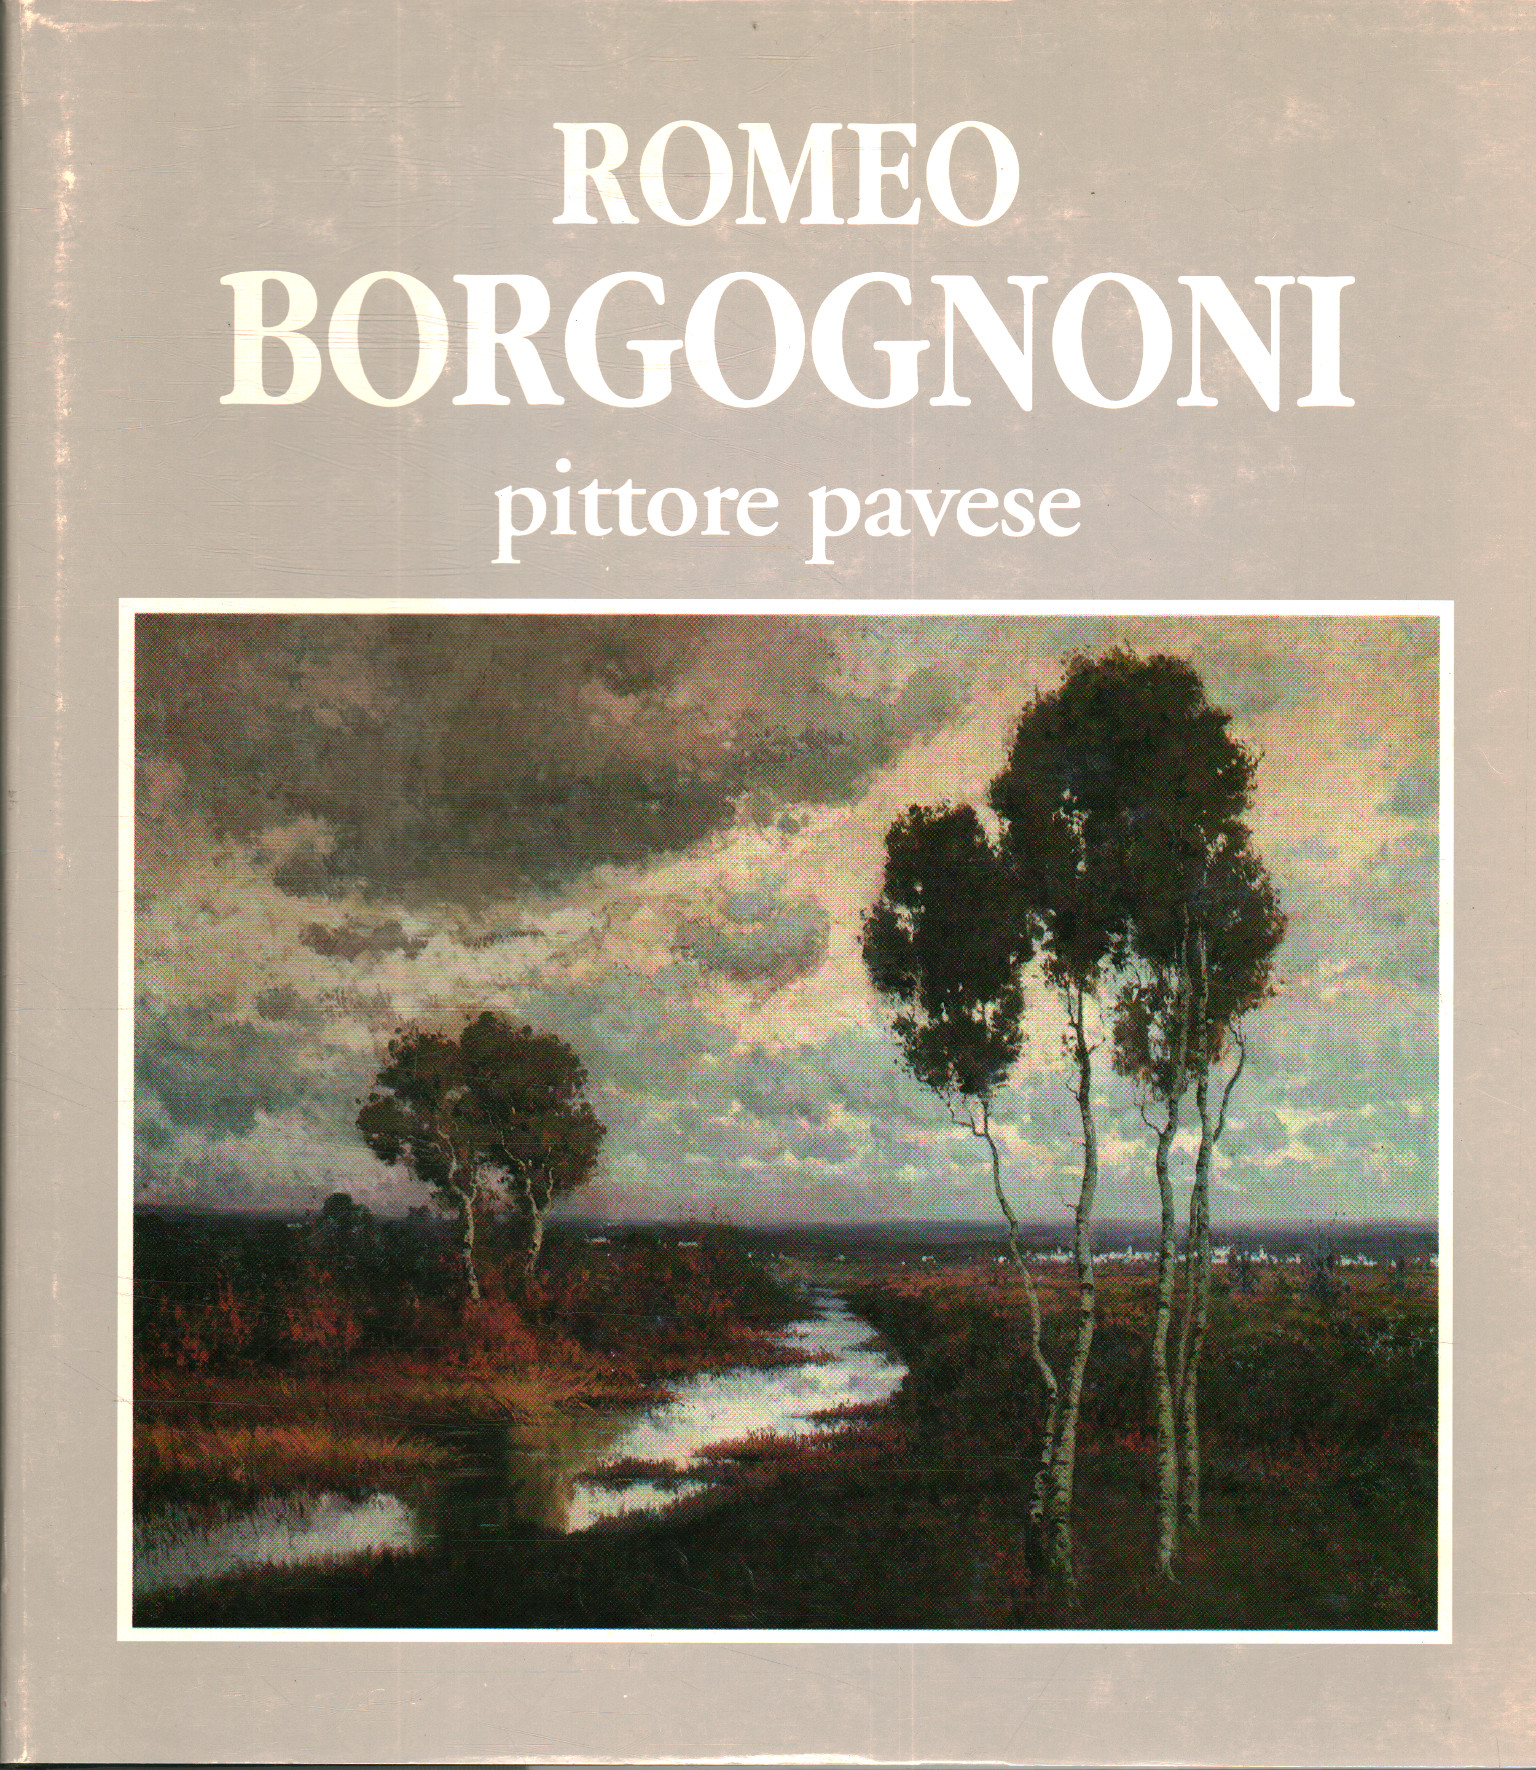 Romeo Borgognoni painter from Pavia